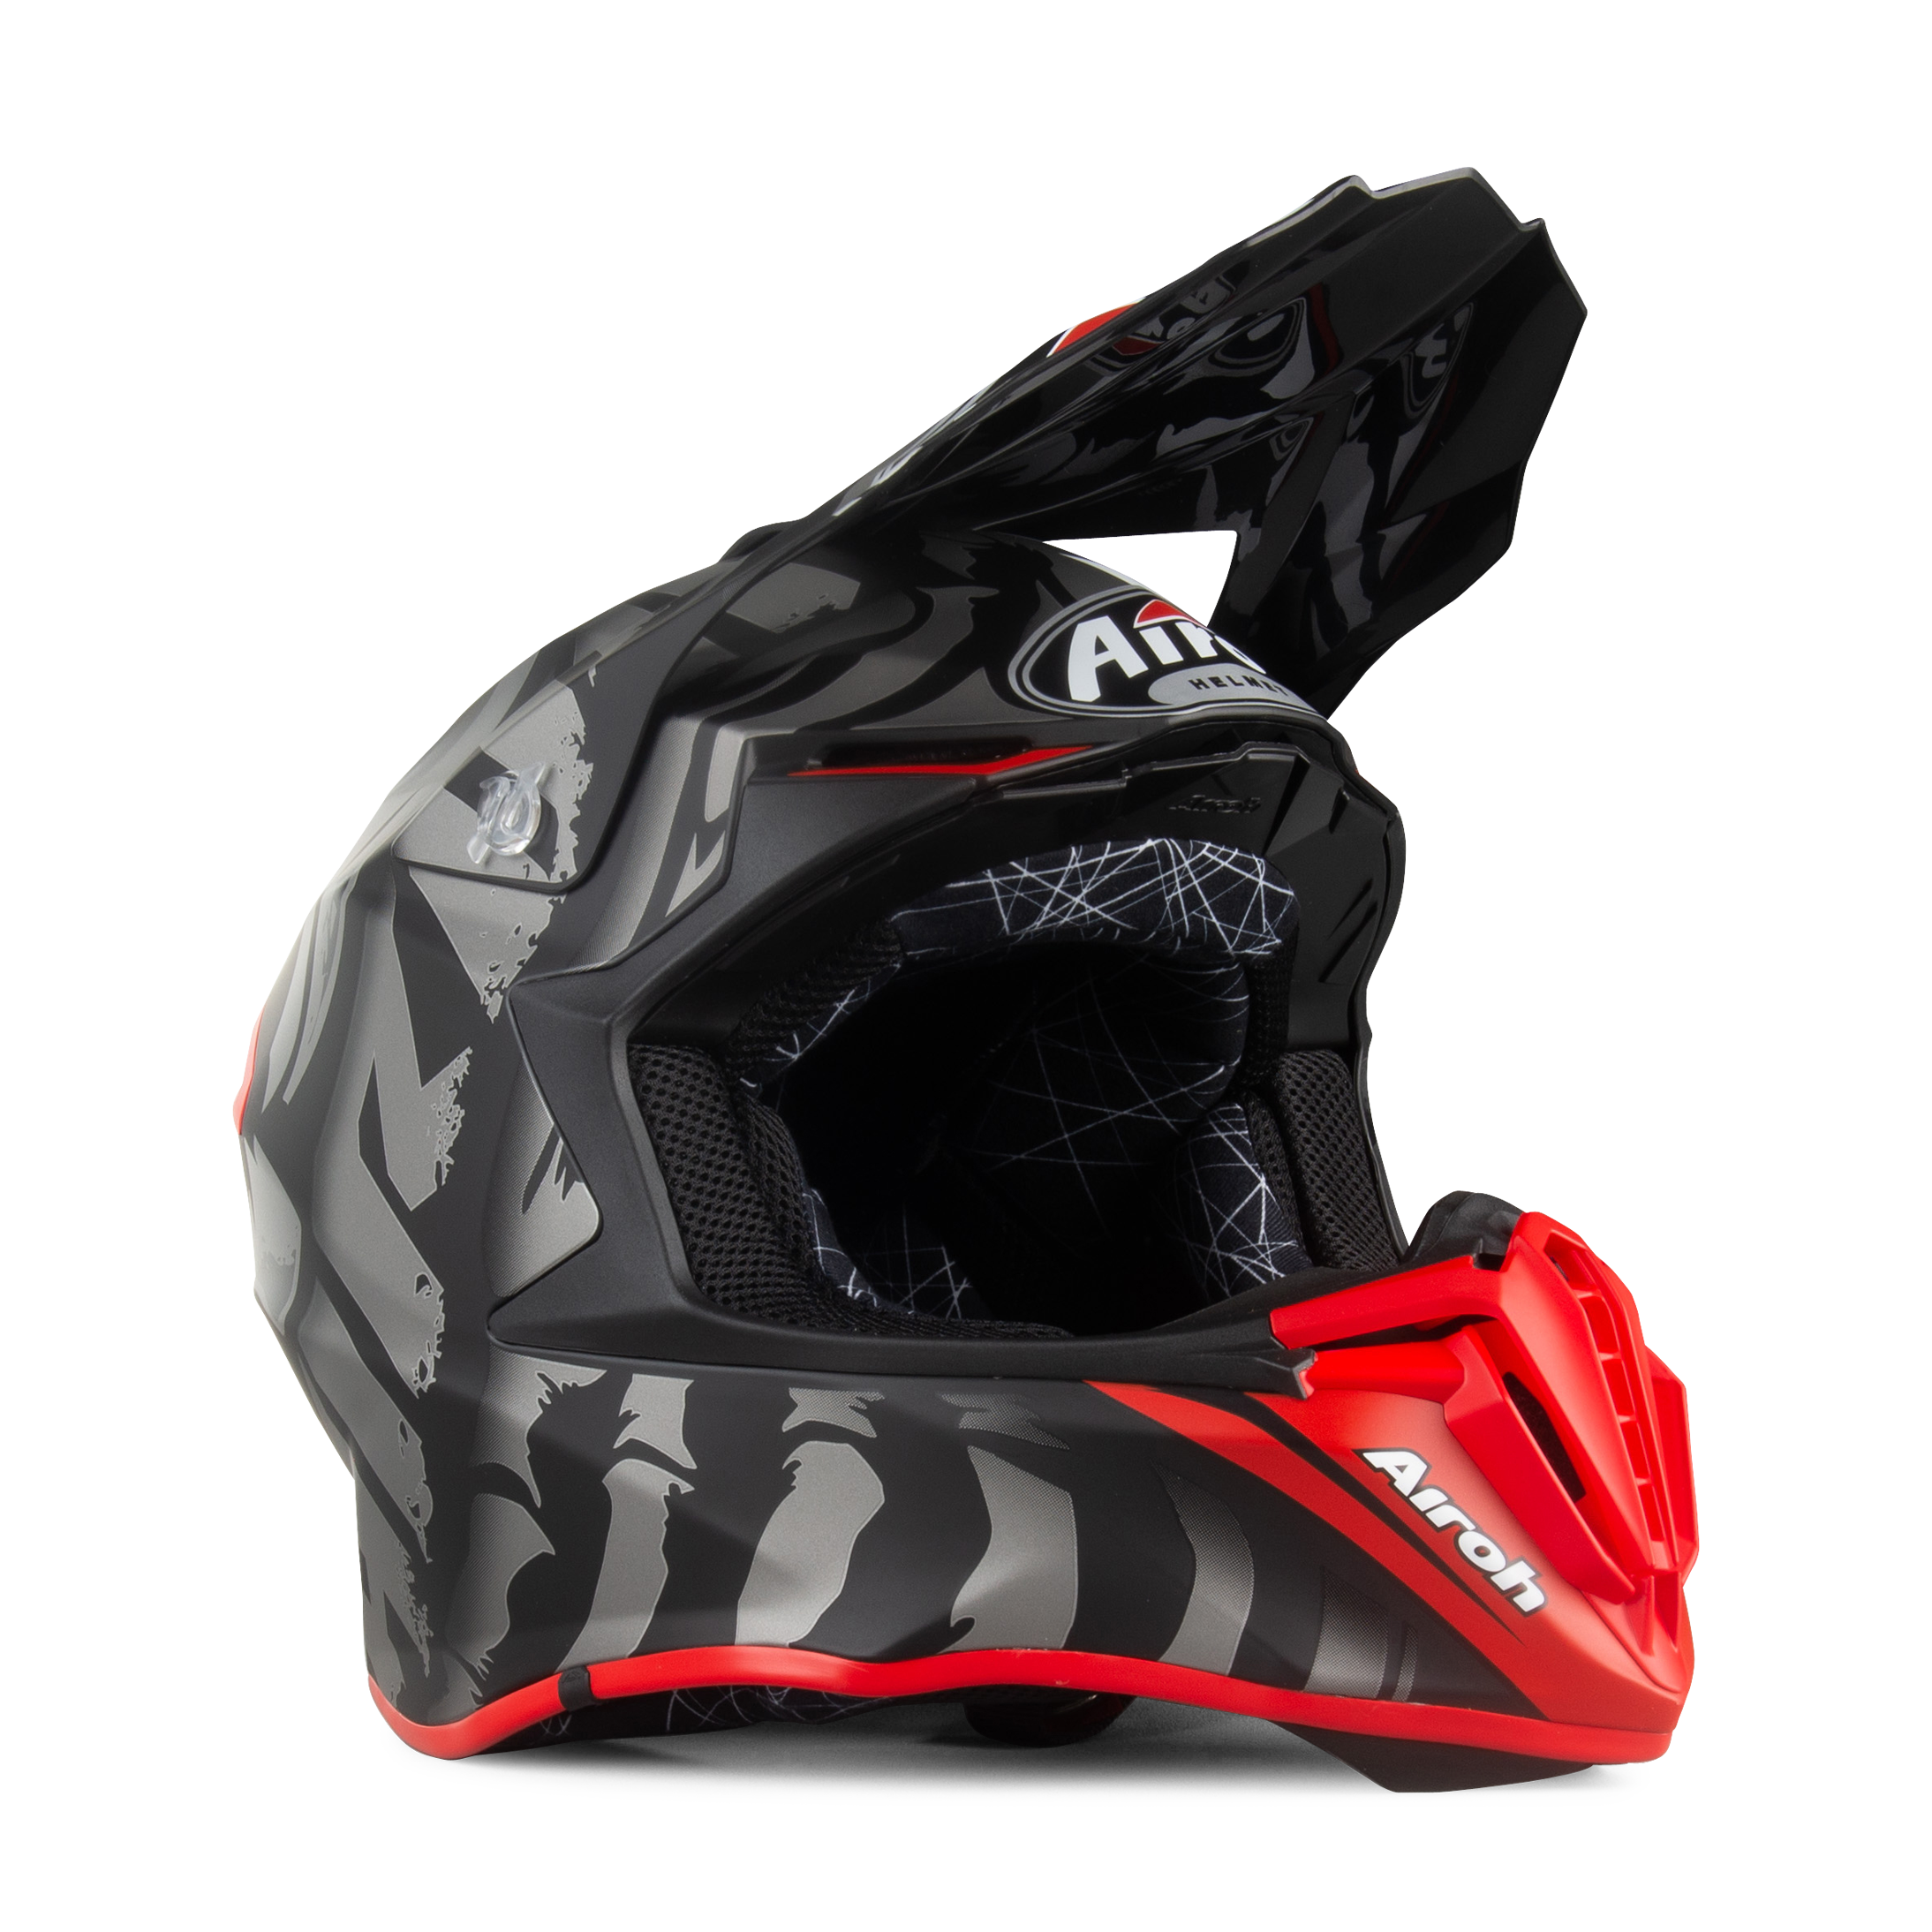 2019 Airoh Twist LEGEND Black Matt Helmet Motocross Enduro L 59-60cm